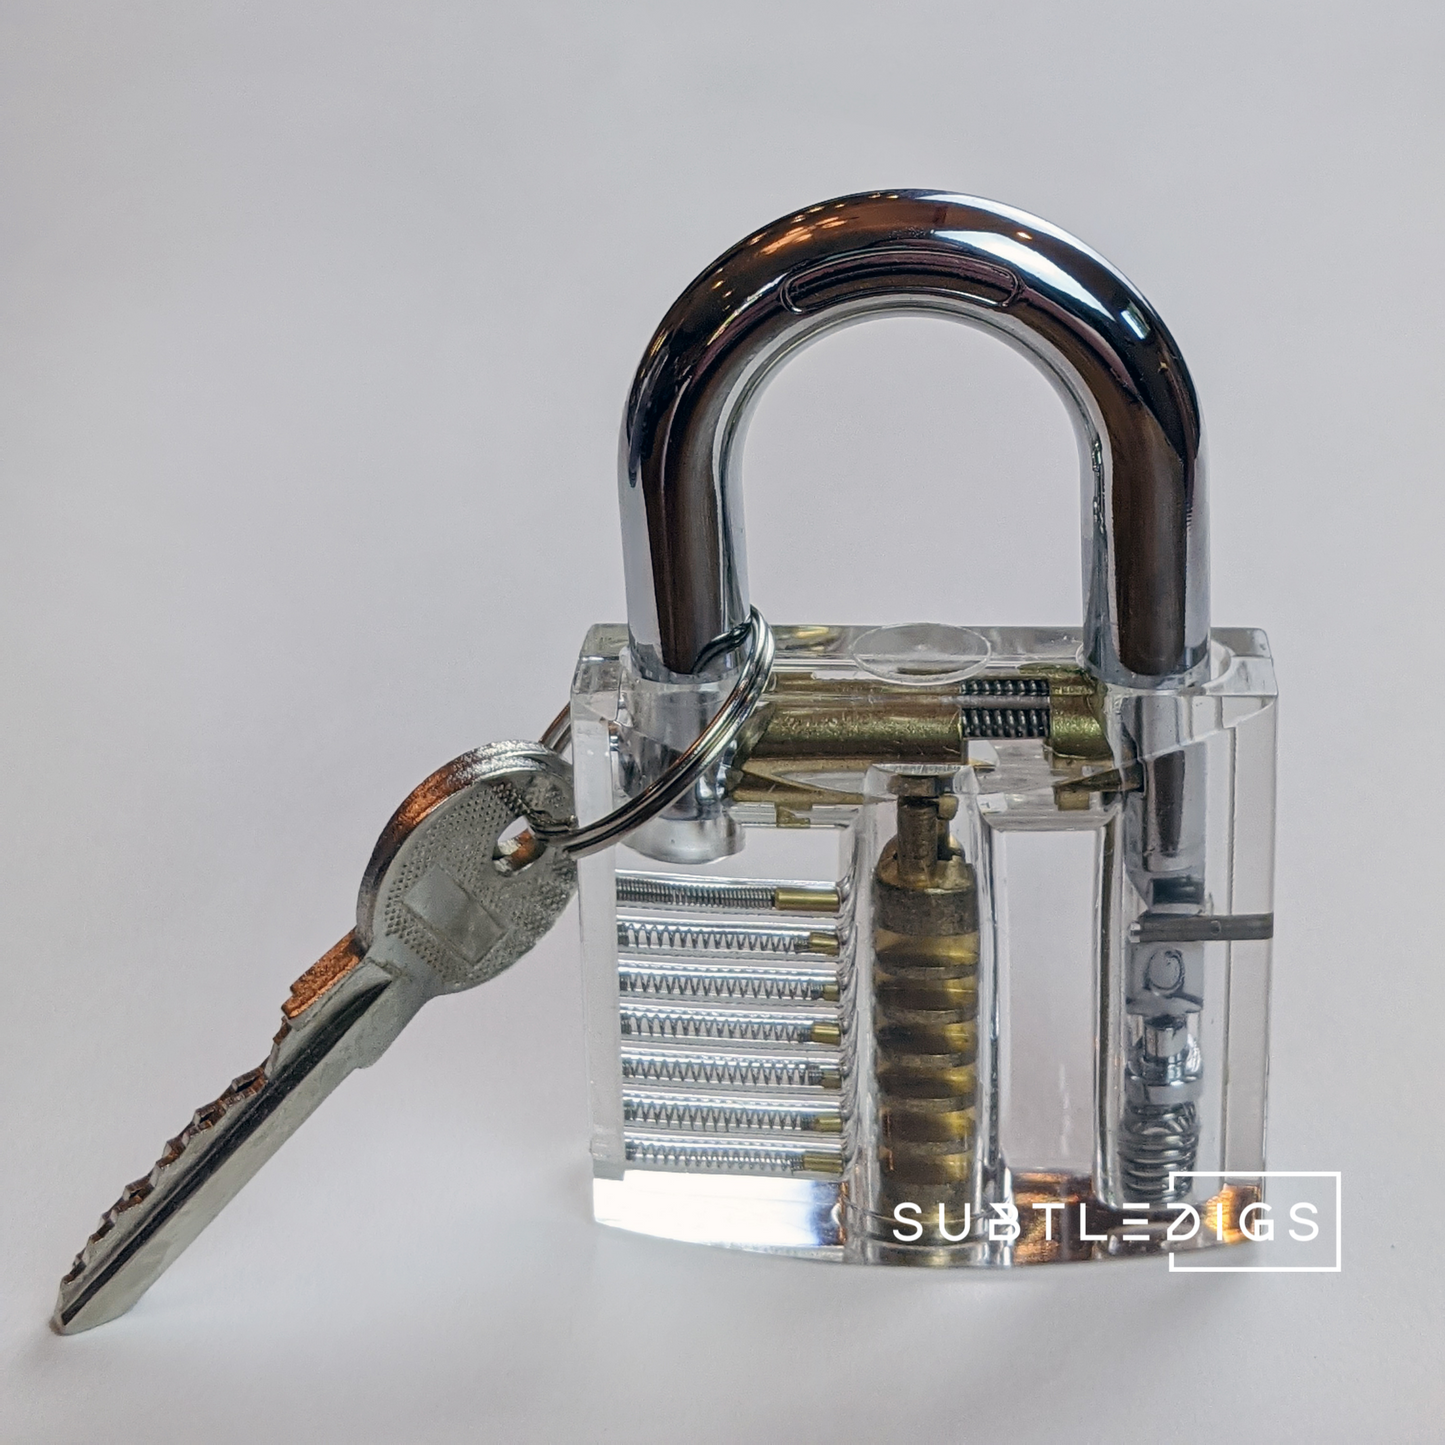 Clear Practice Lock | Transparent Padlock